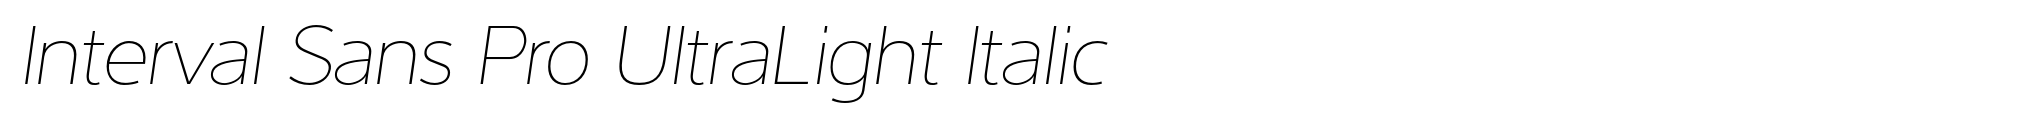 Interval Sans Pro UltraLight Italic image